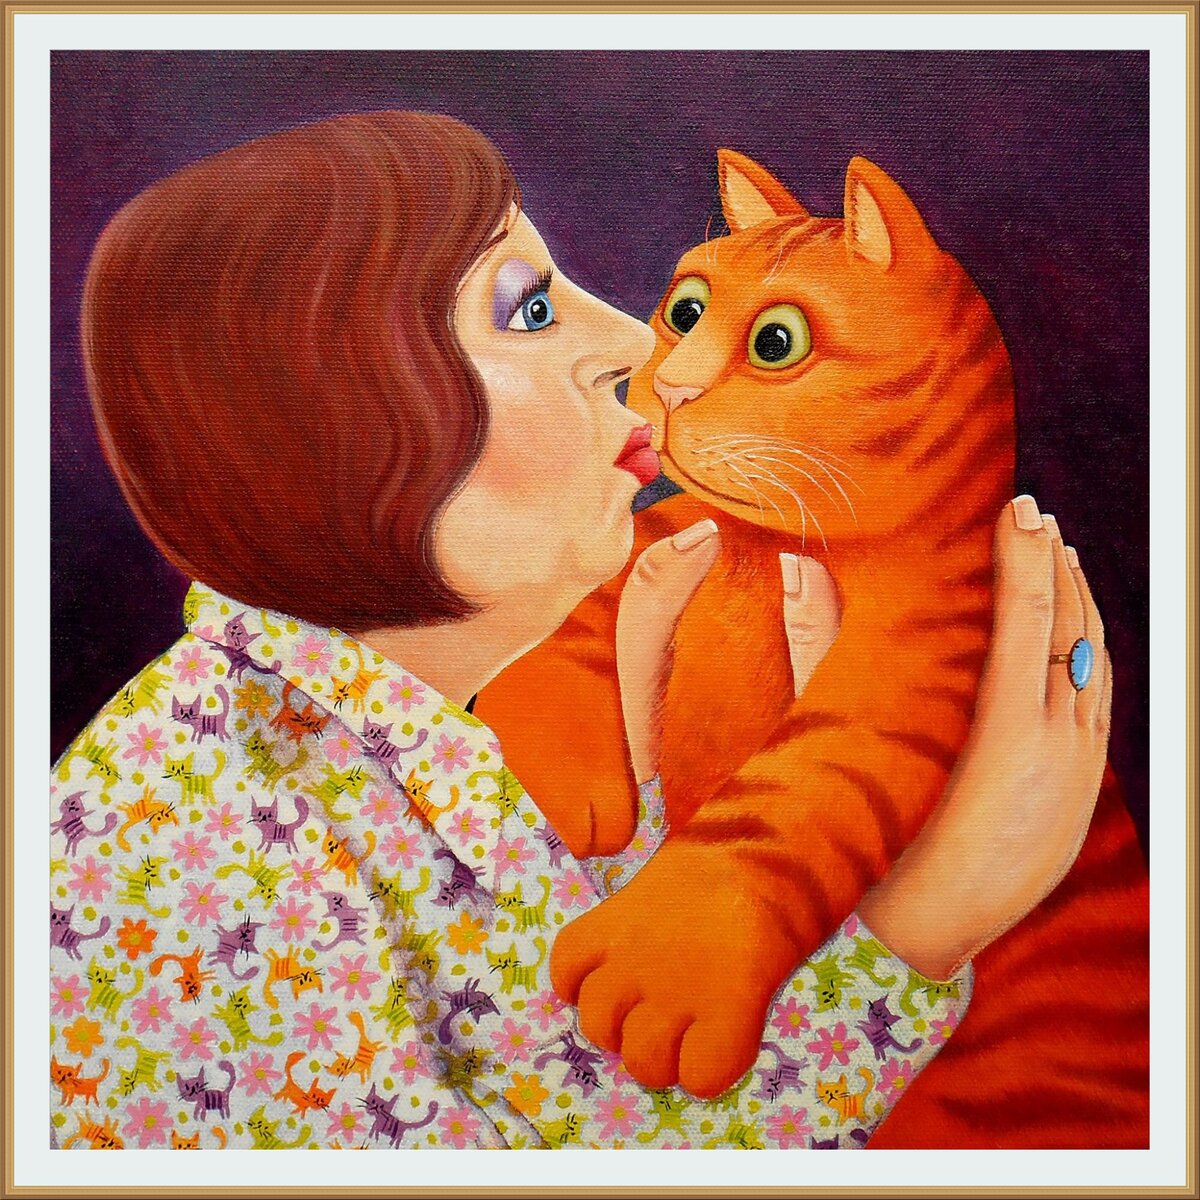 Таня хозяйка кота. Картины художницы Вики Маунт. Vicky Mount художник.